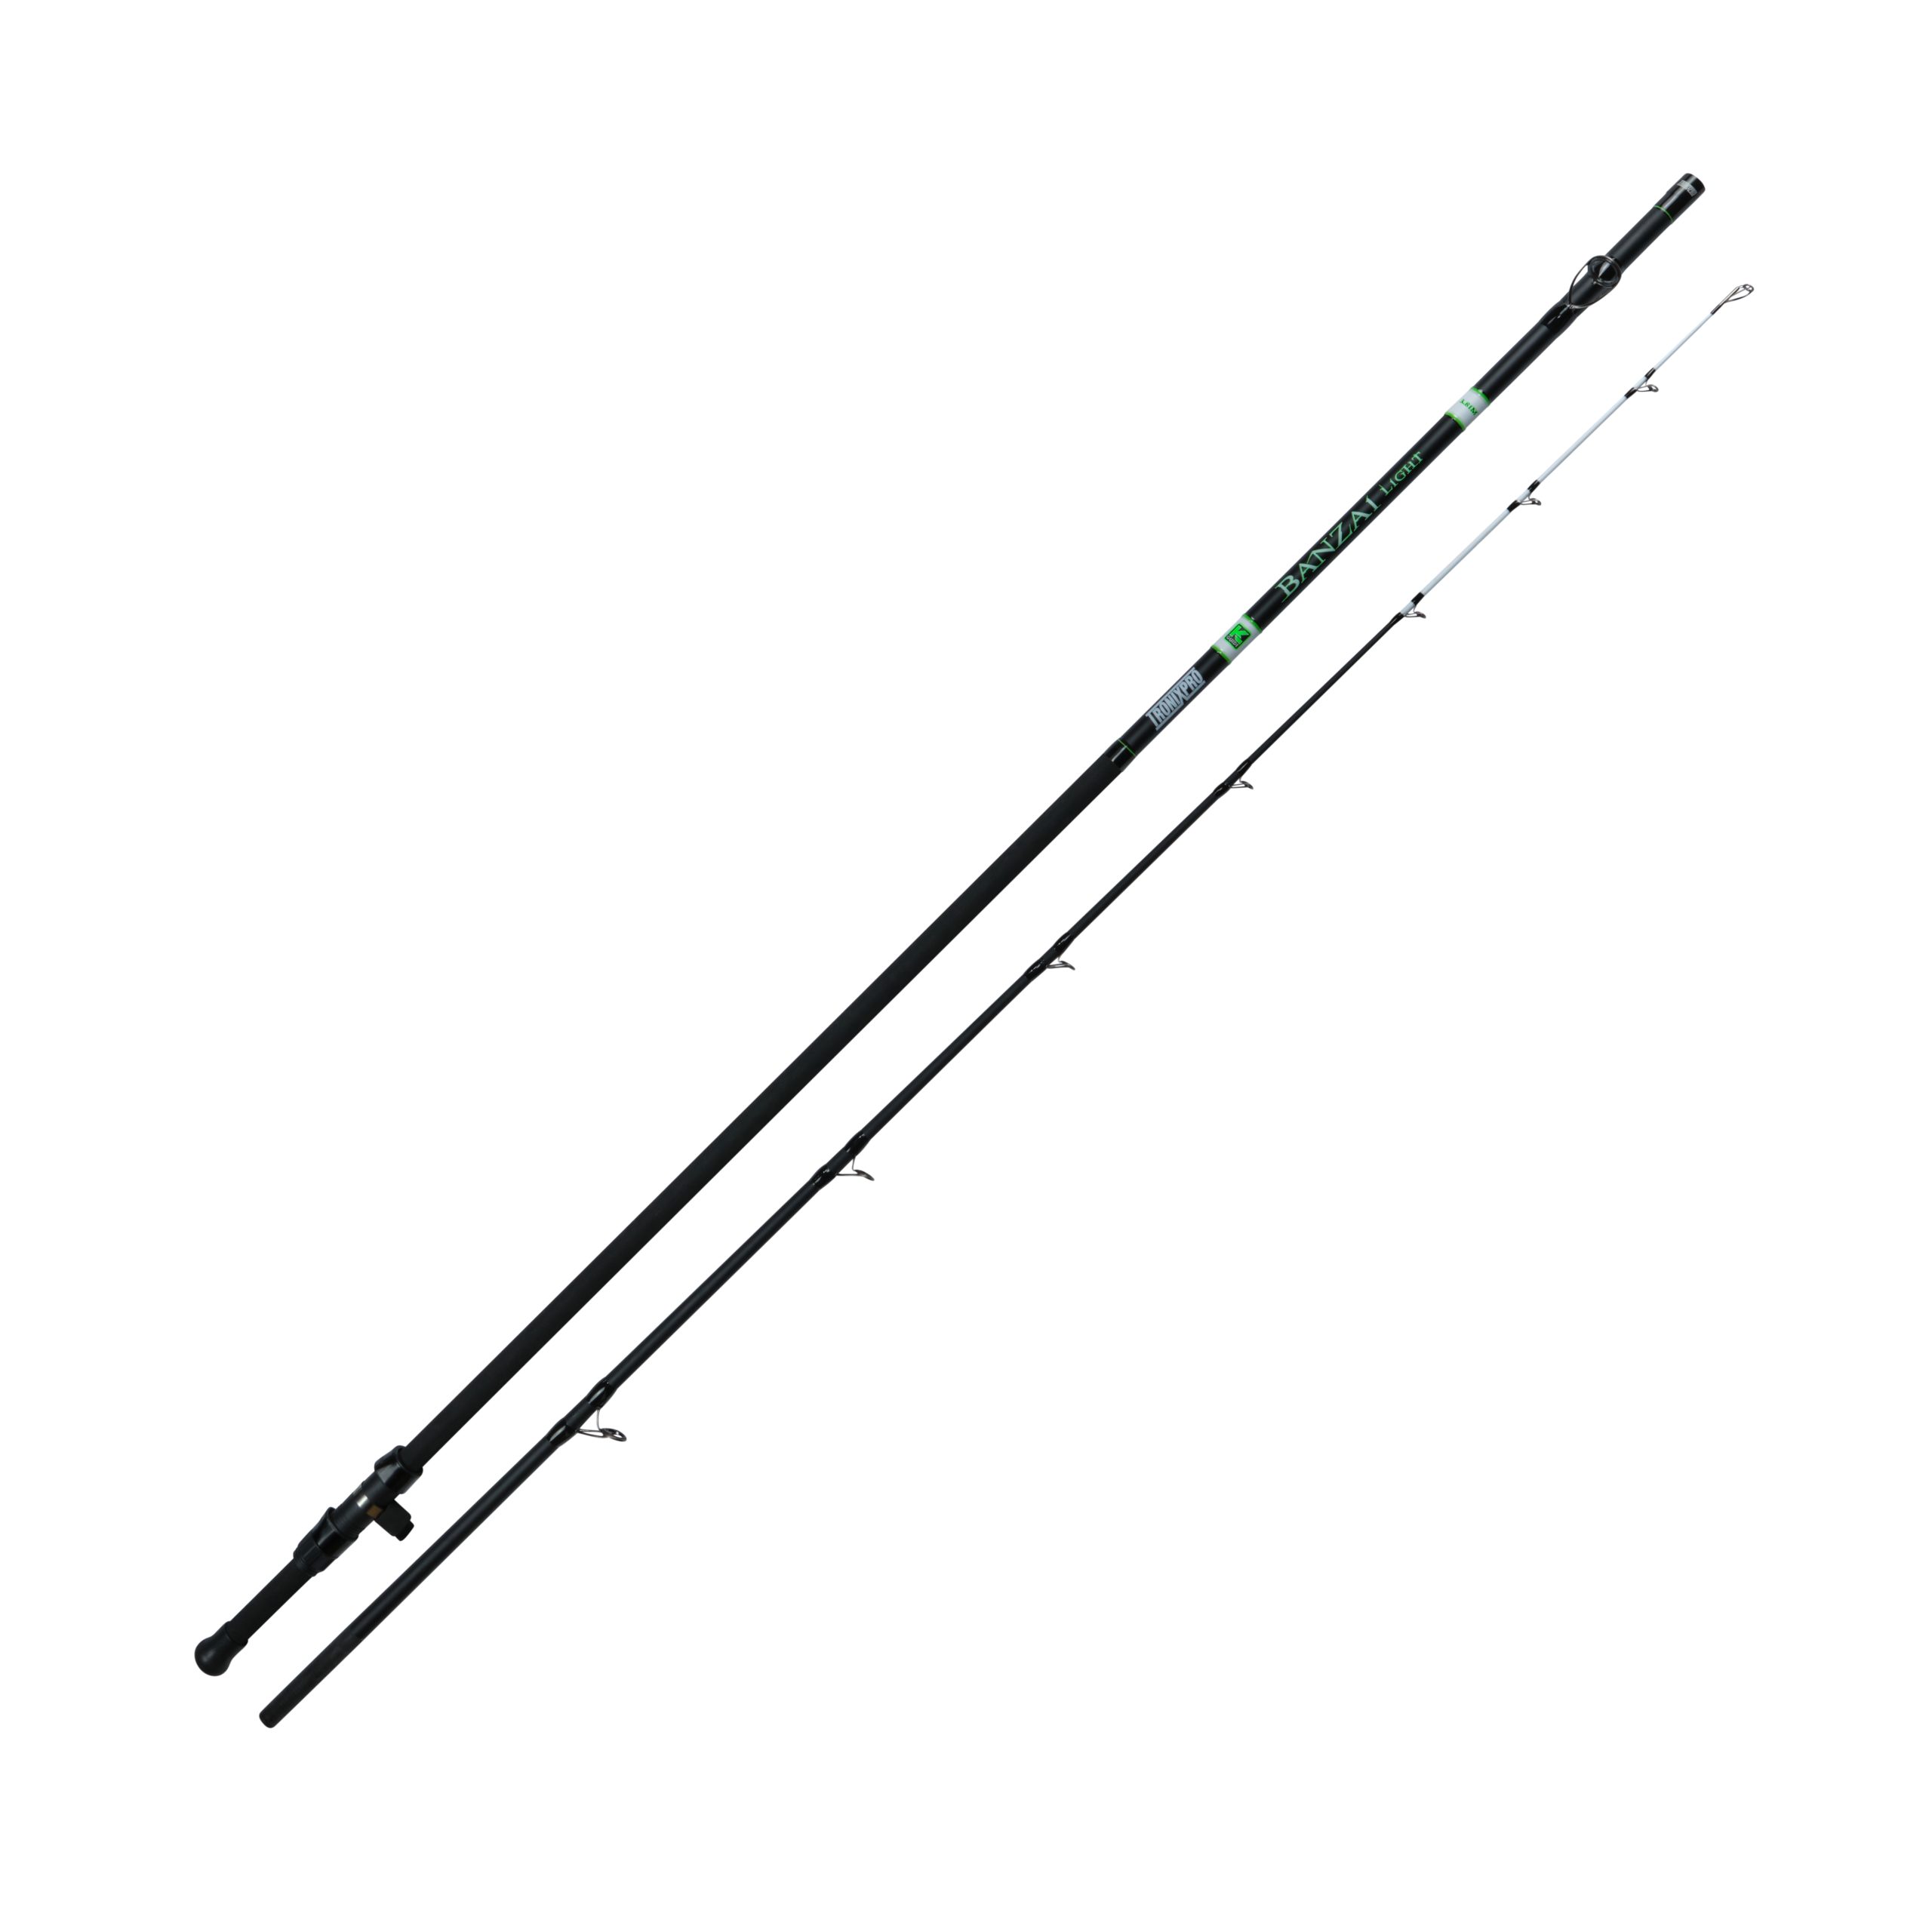 Tronixpro Banzai Light Rod 12'6 2-5oz